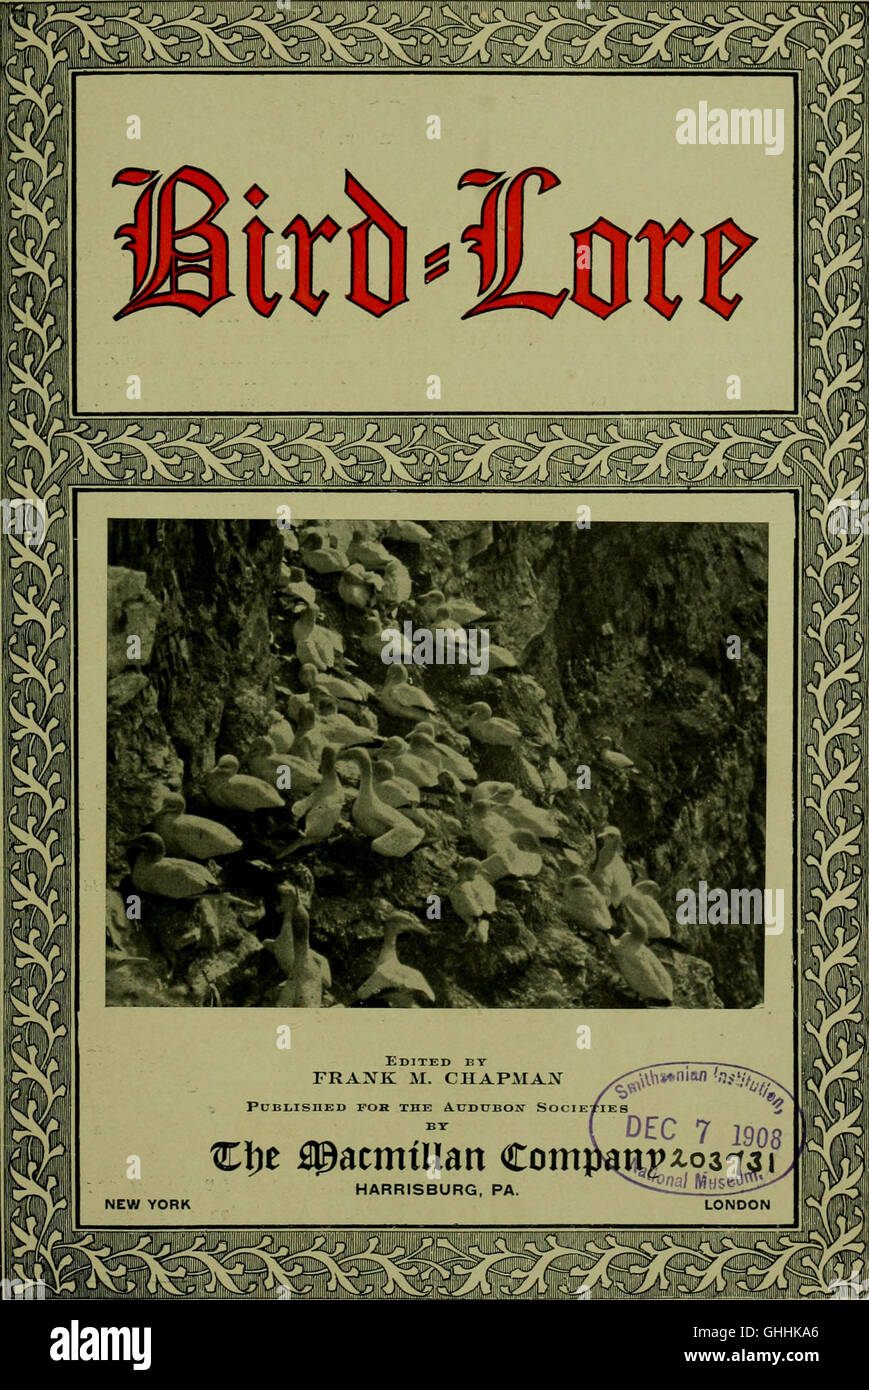 Bird lore (1908) Stock Photo